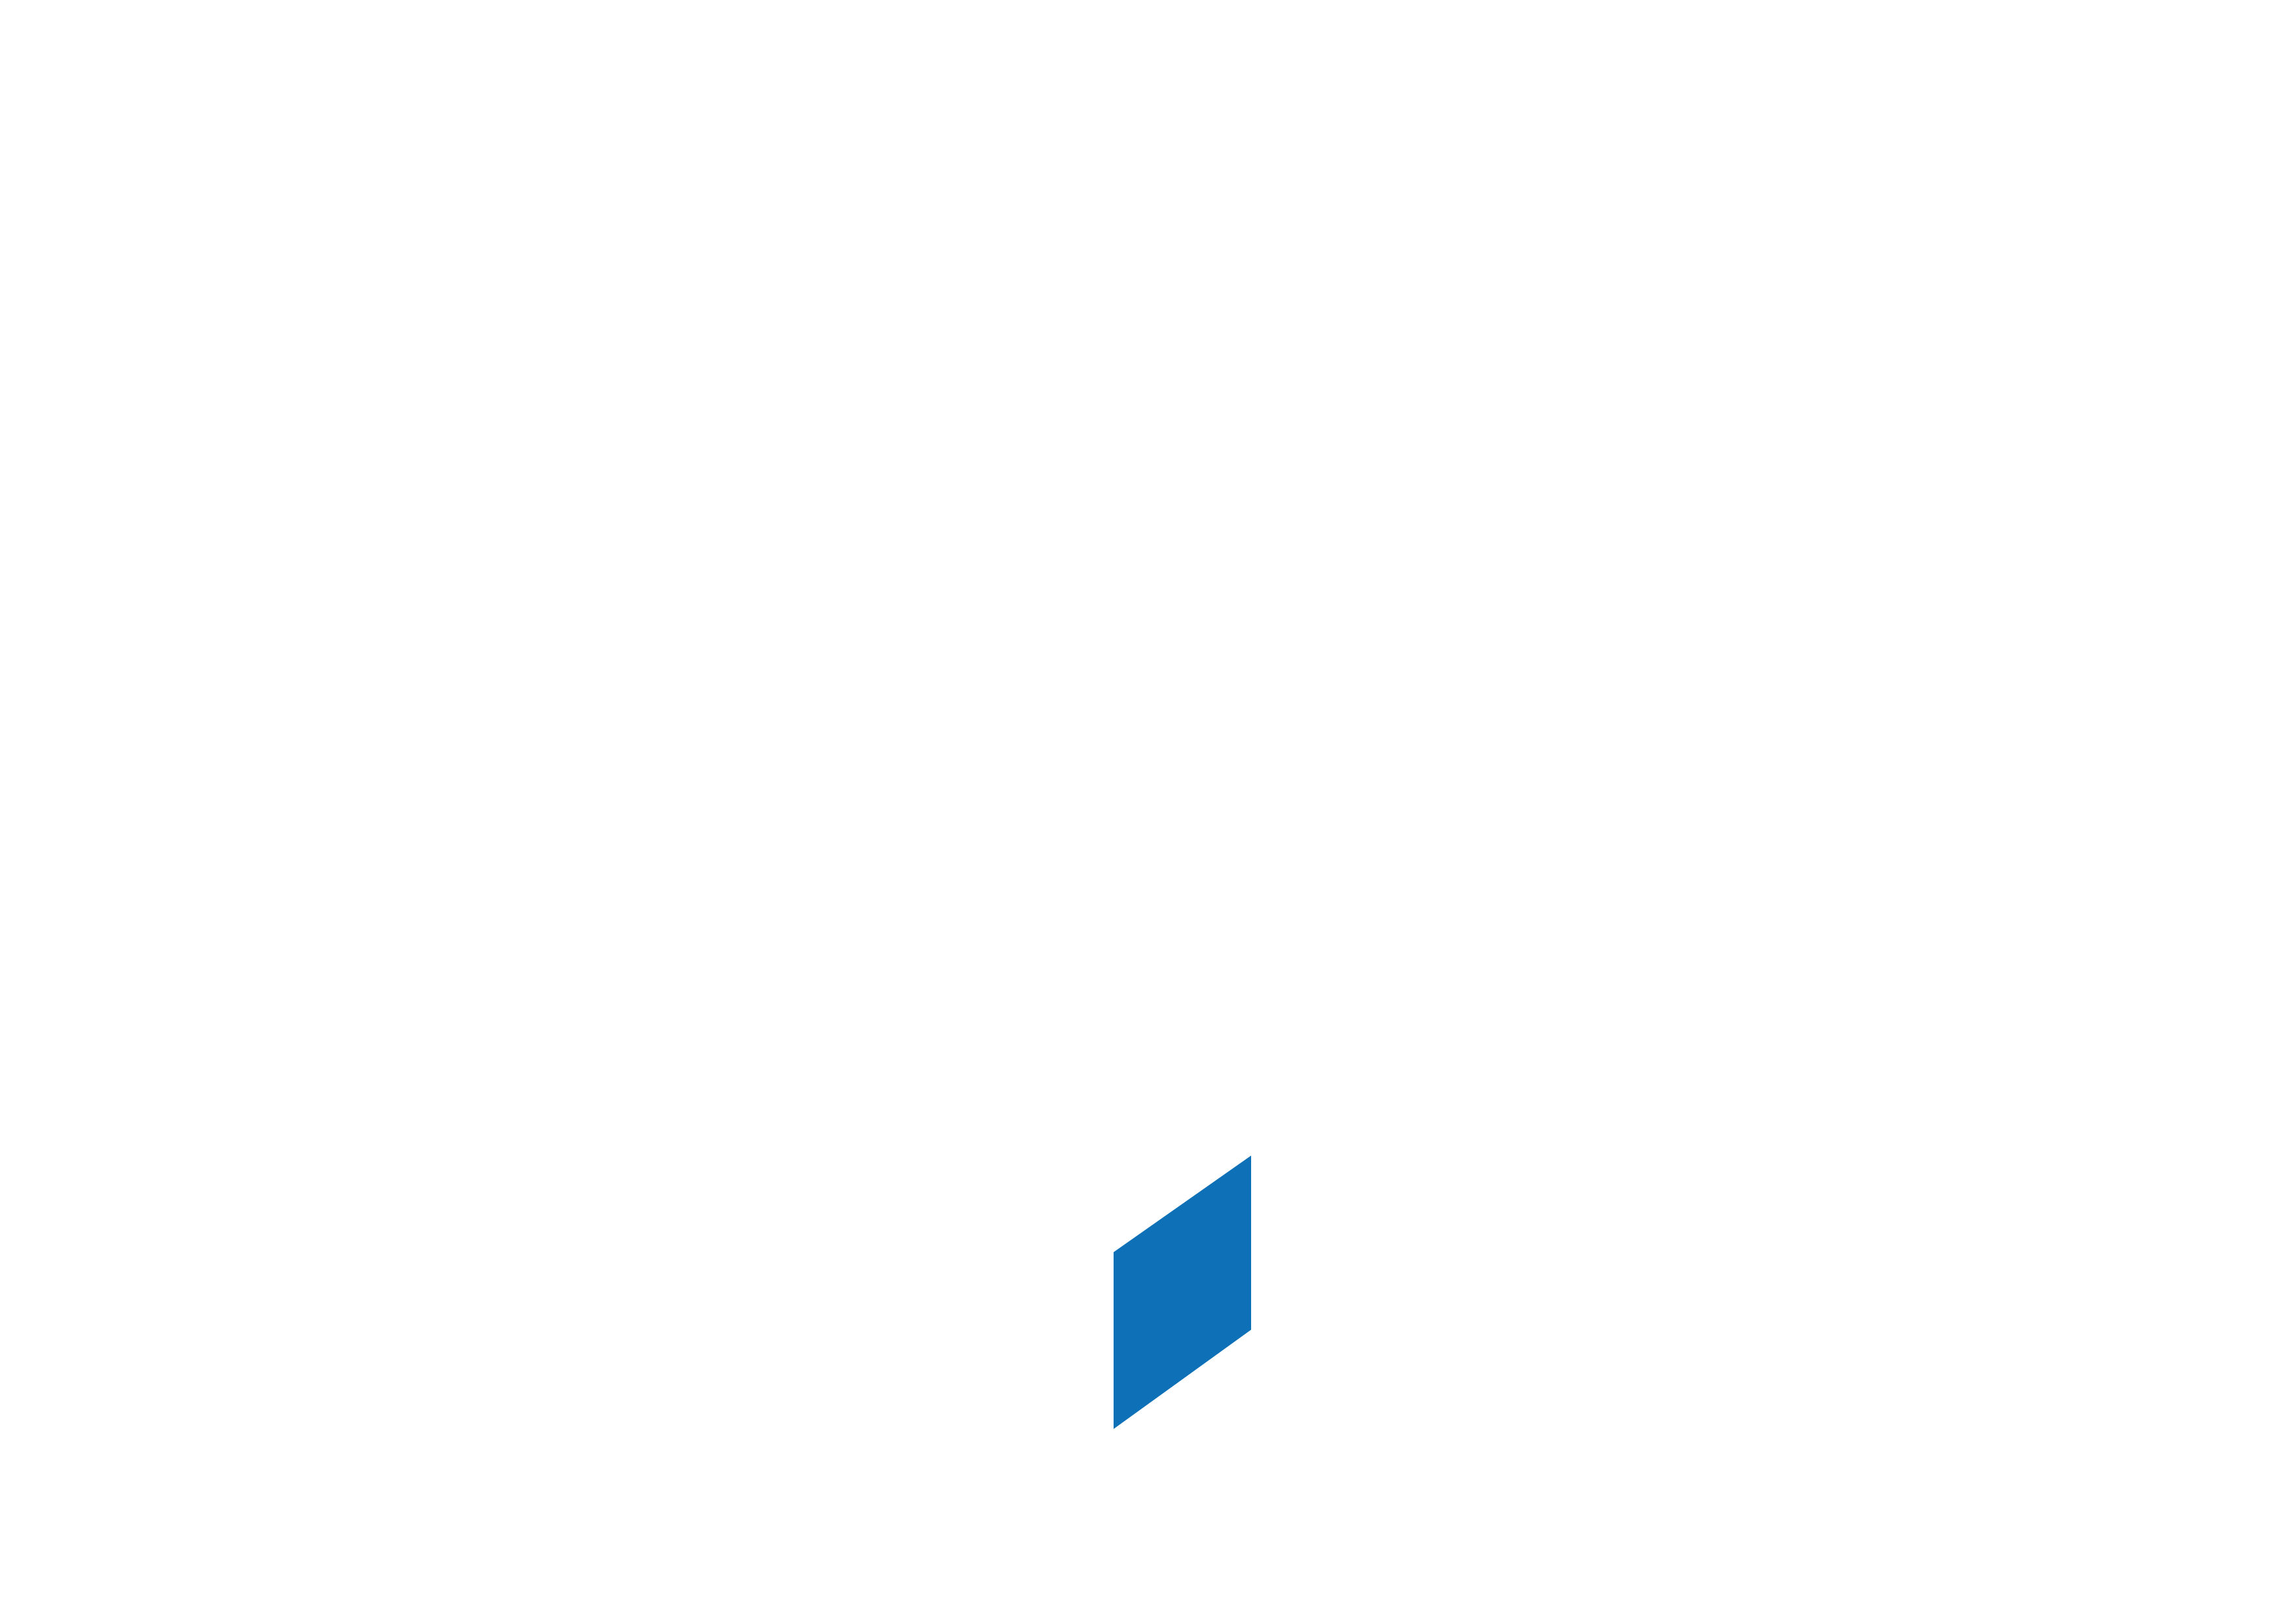 Mathsfit